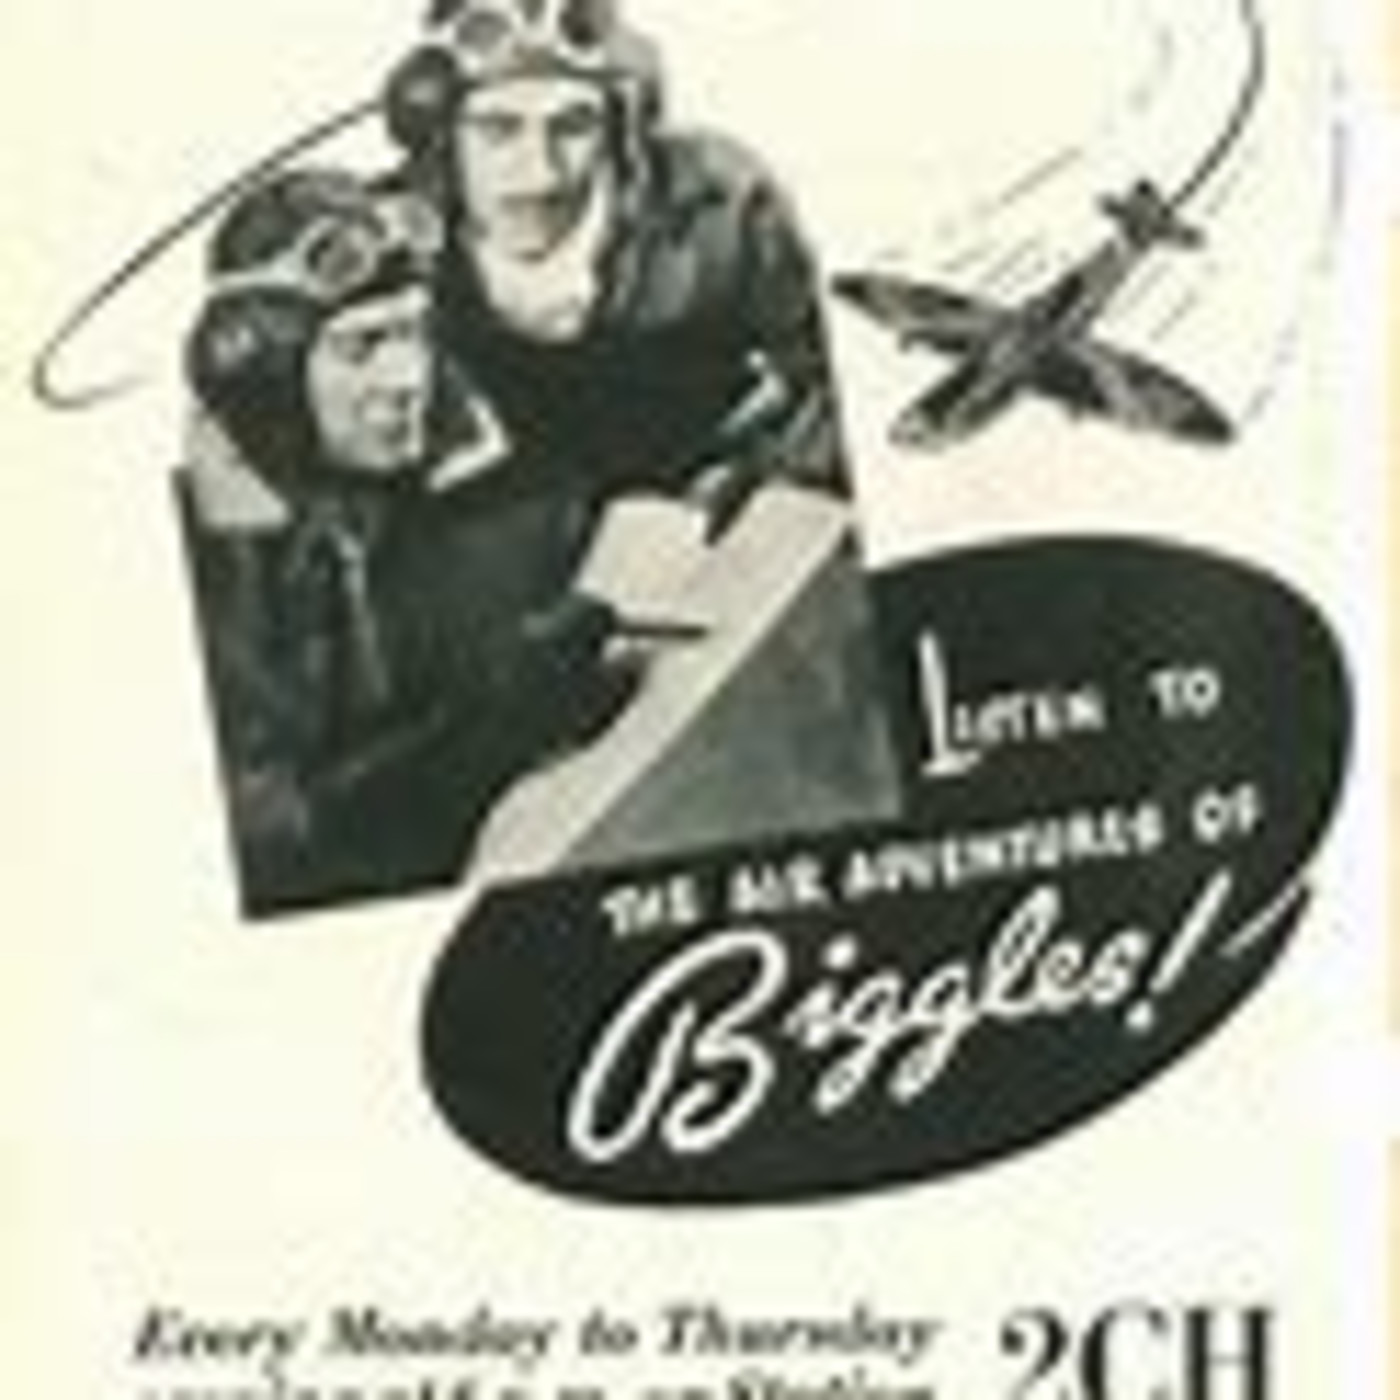 Air Adventures of Biggles xx-xx-xx International Brigade (18)